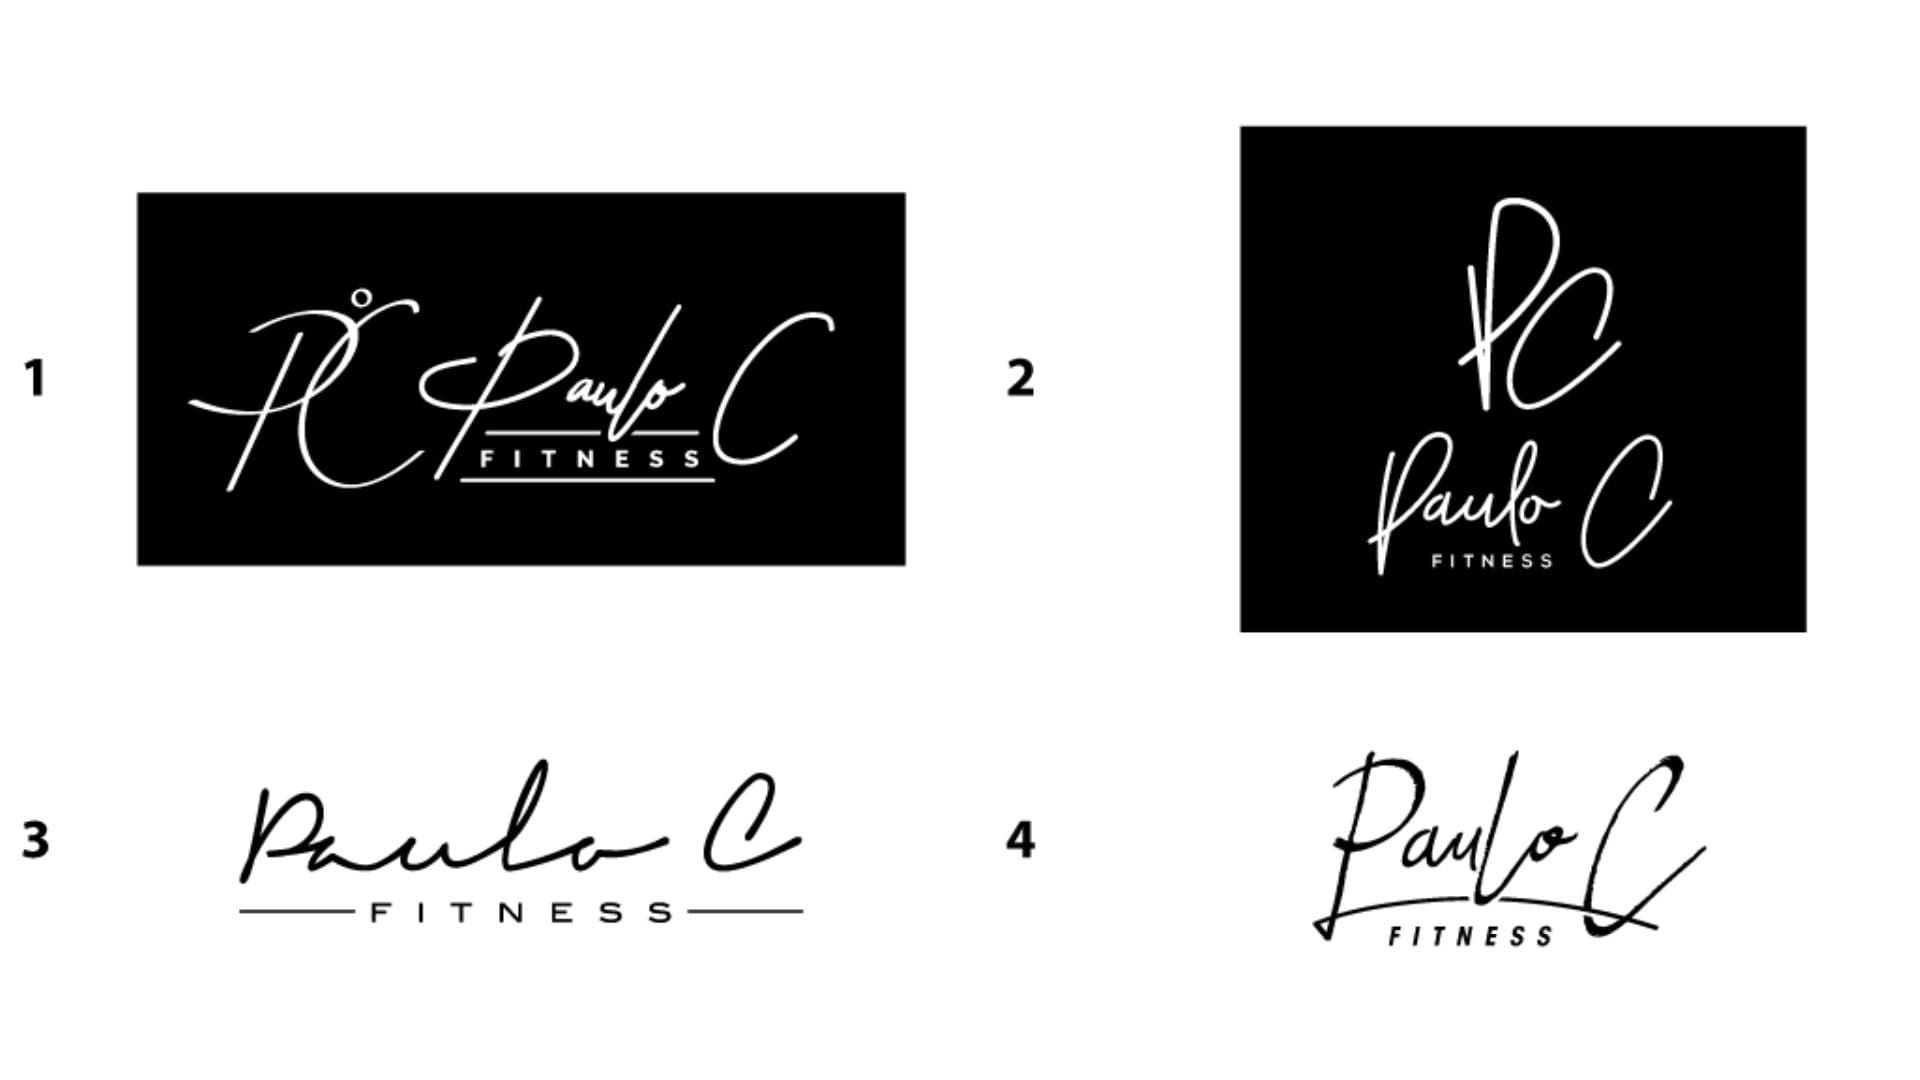 Paulo C Fitness - Logo Concepts 02